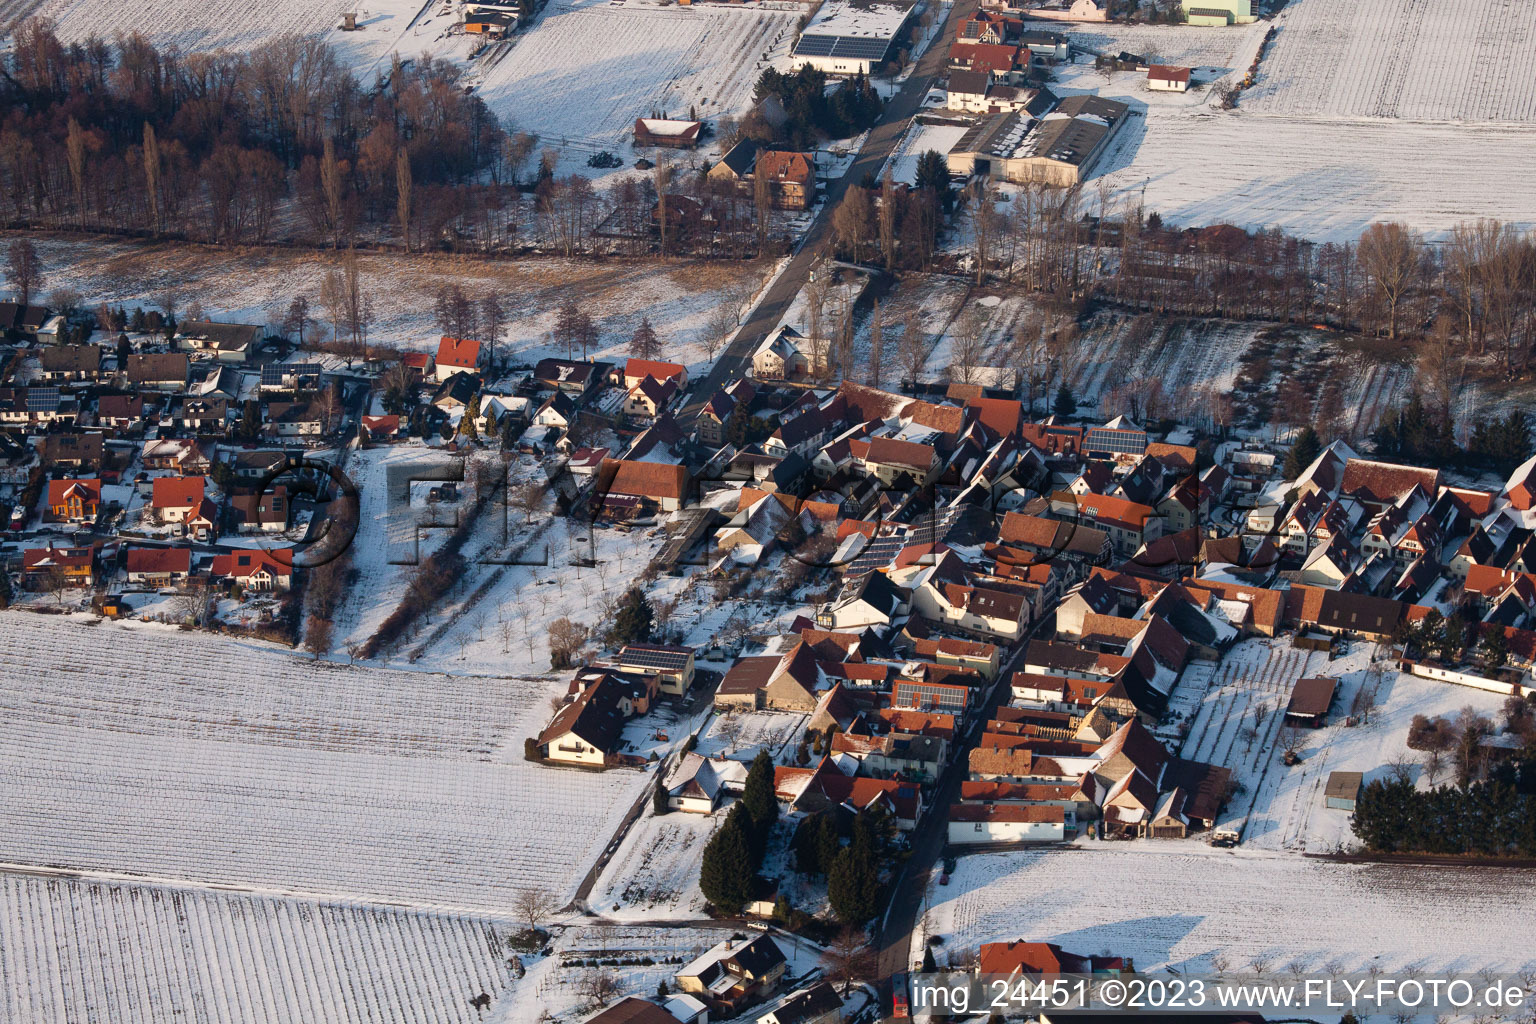 Oblique view of In winter in the district Klingen in Heuchelheim-Klingen in the state Rhineland-Palatinate, Germany